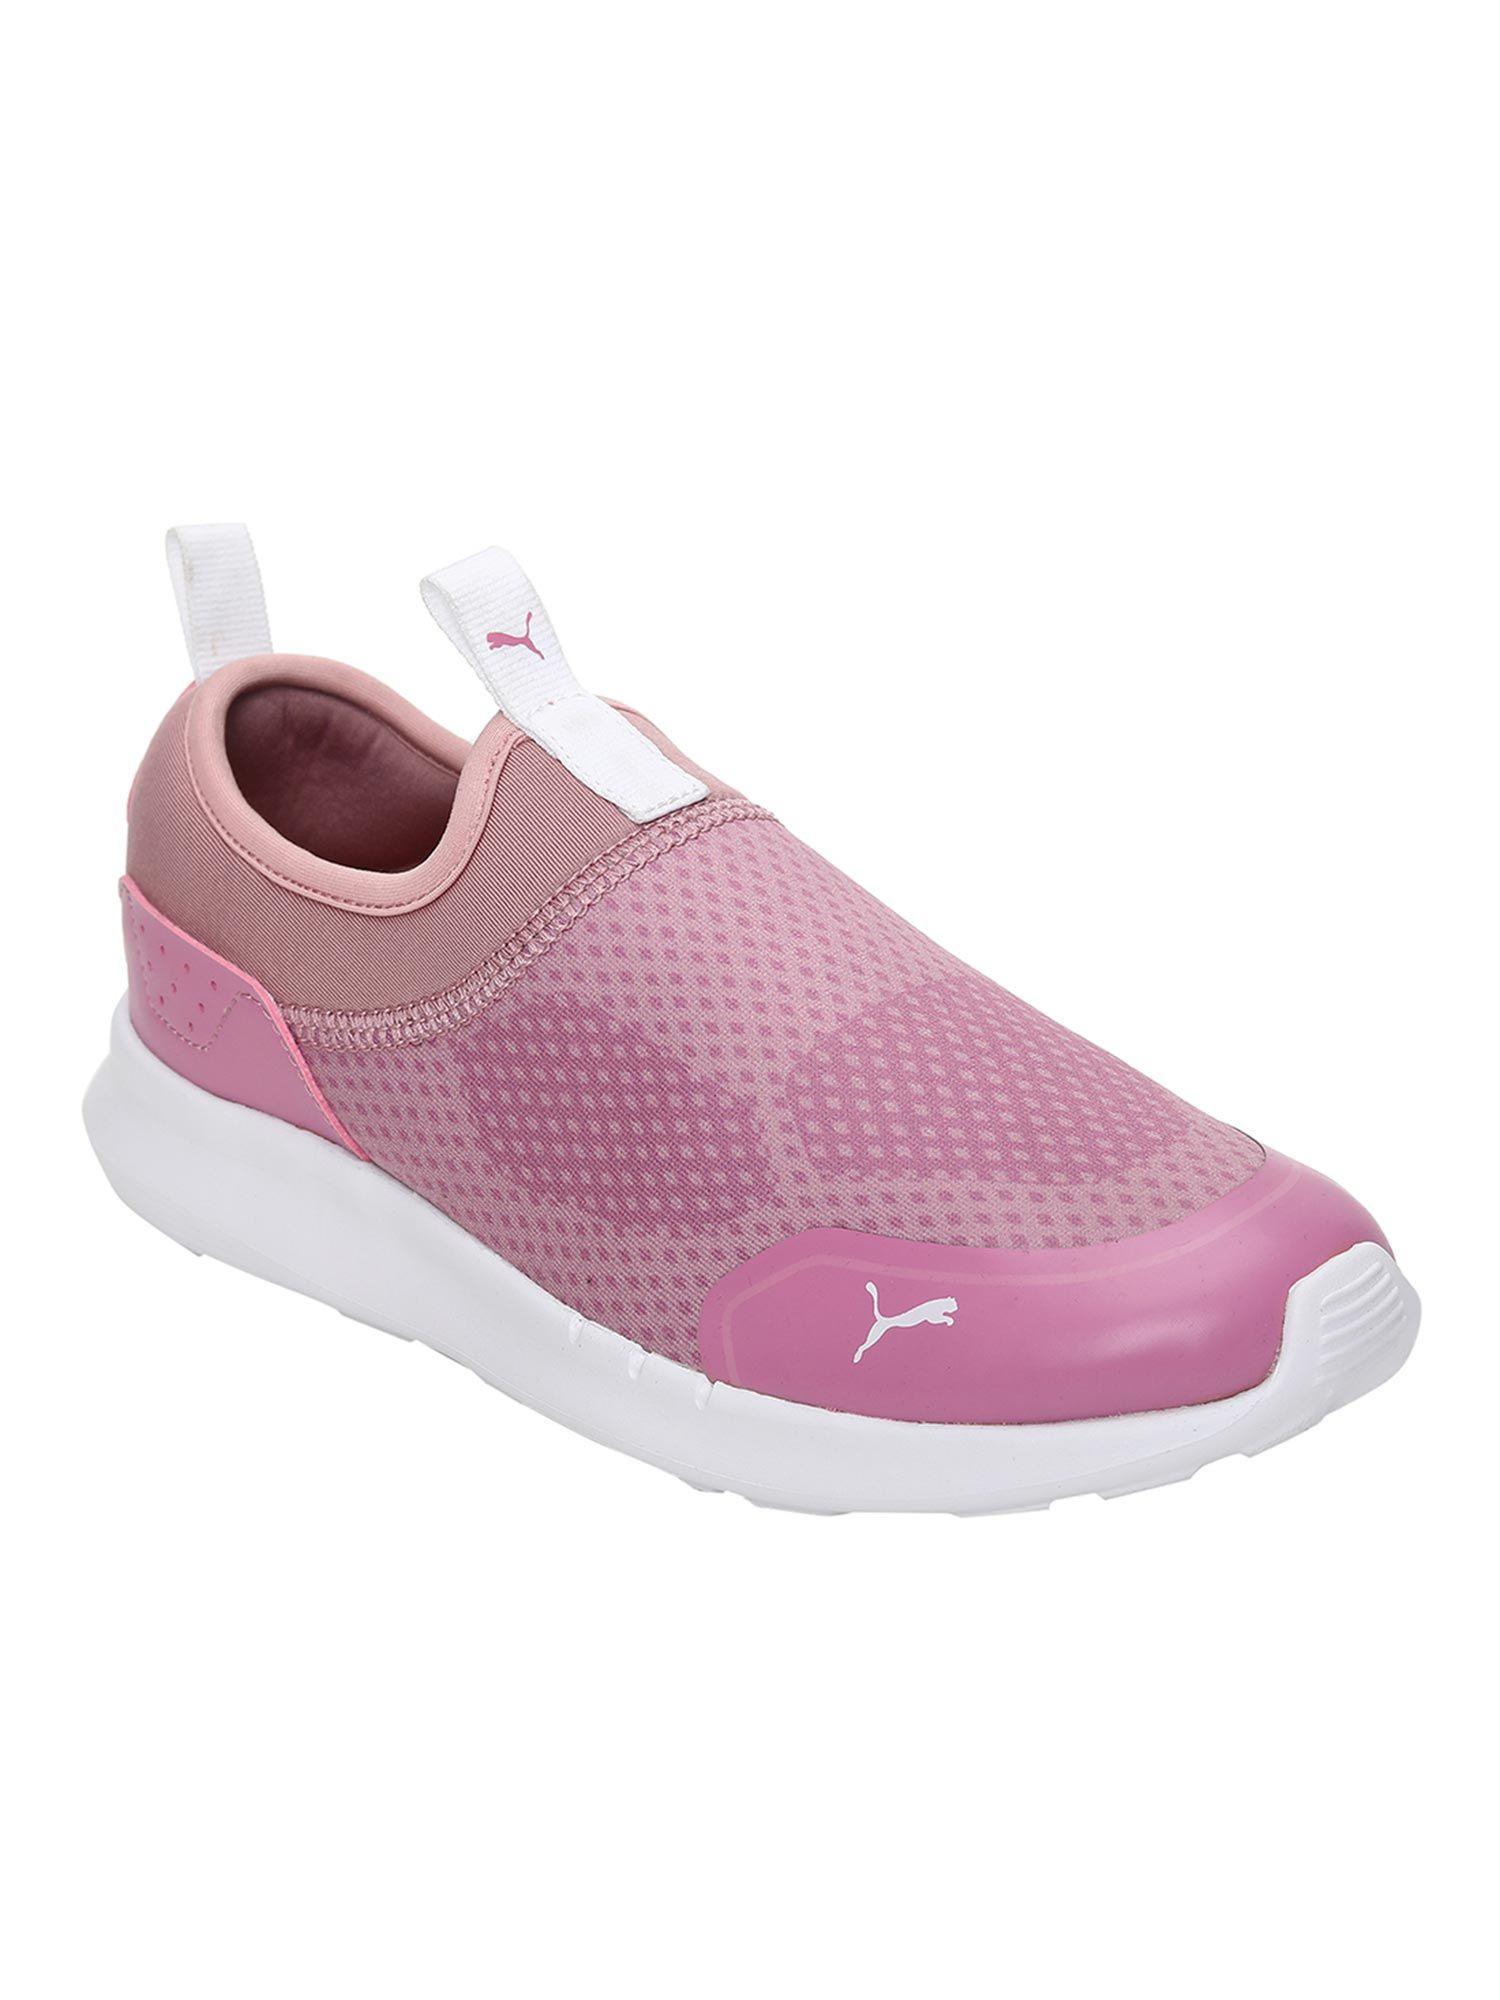 comfort slipon v2 womens pink walking shoes